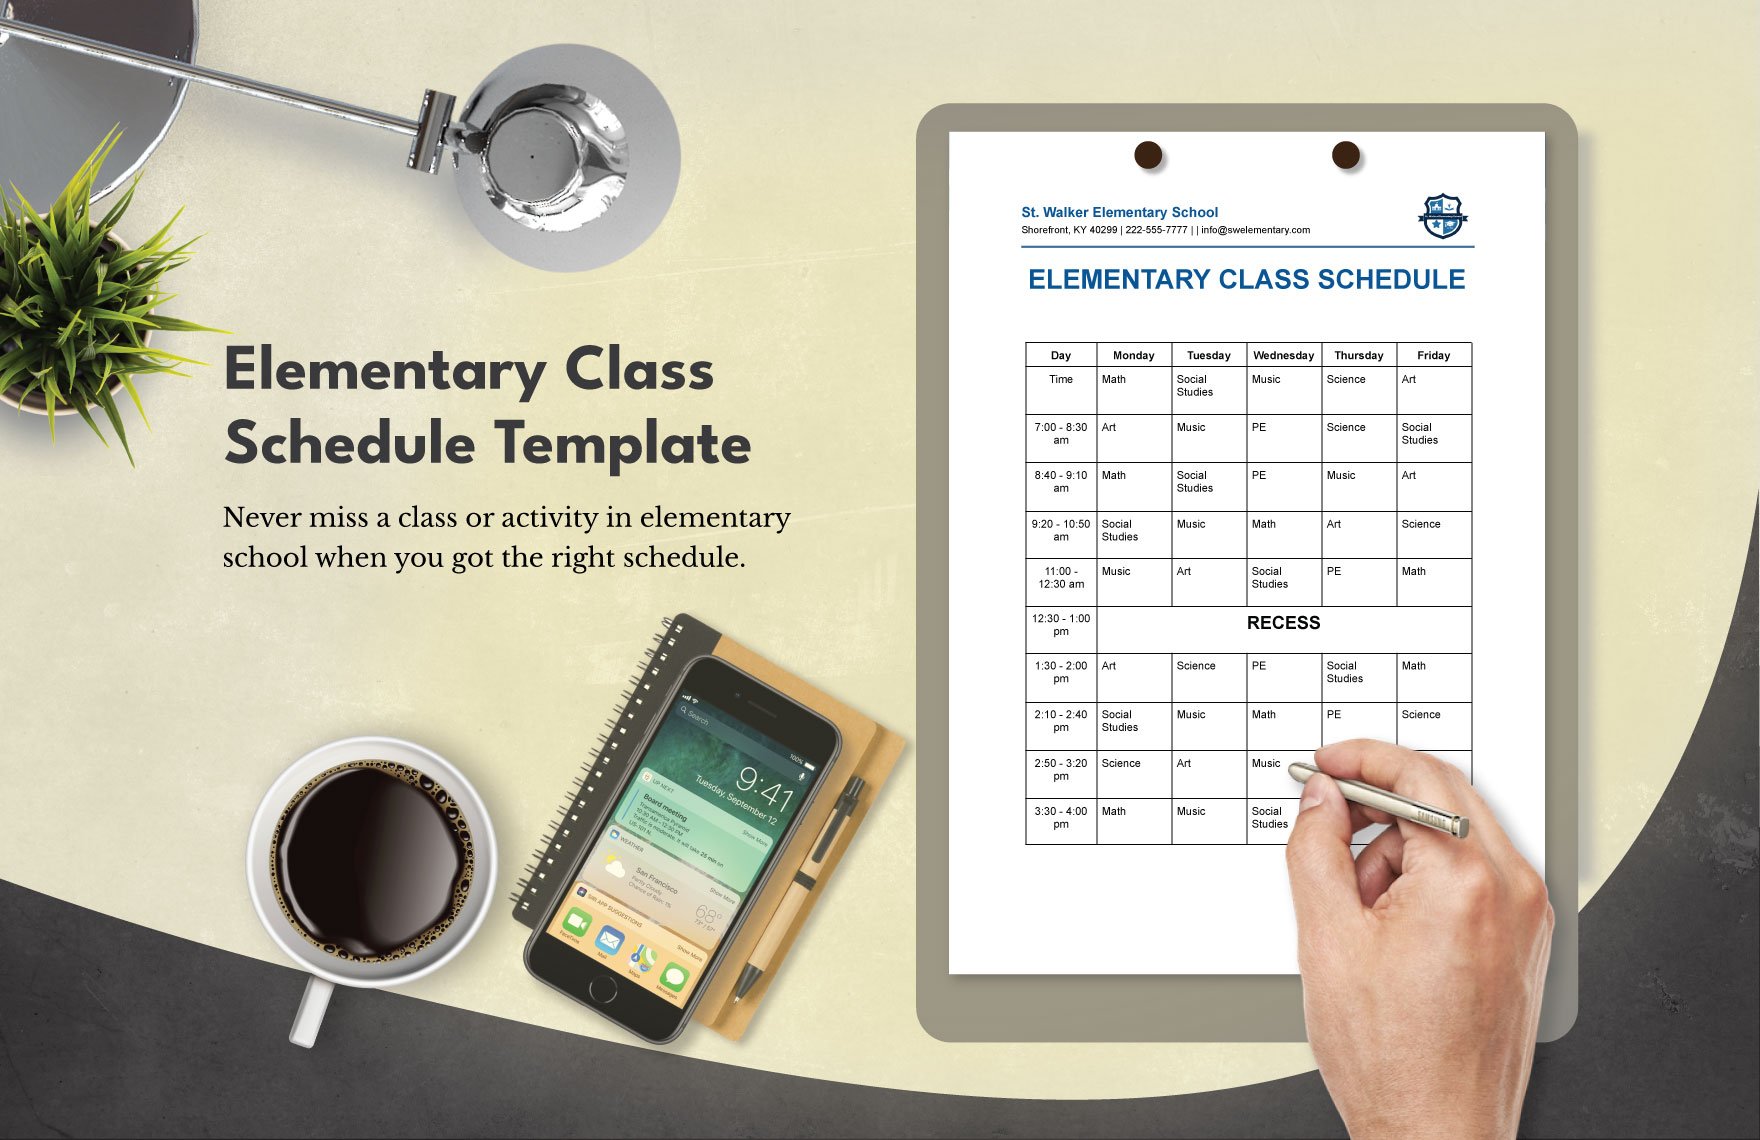 Elementary Class Schedule Template